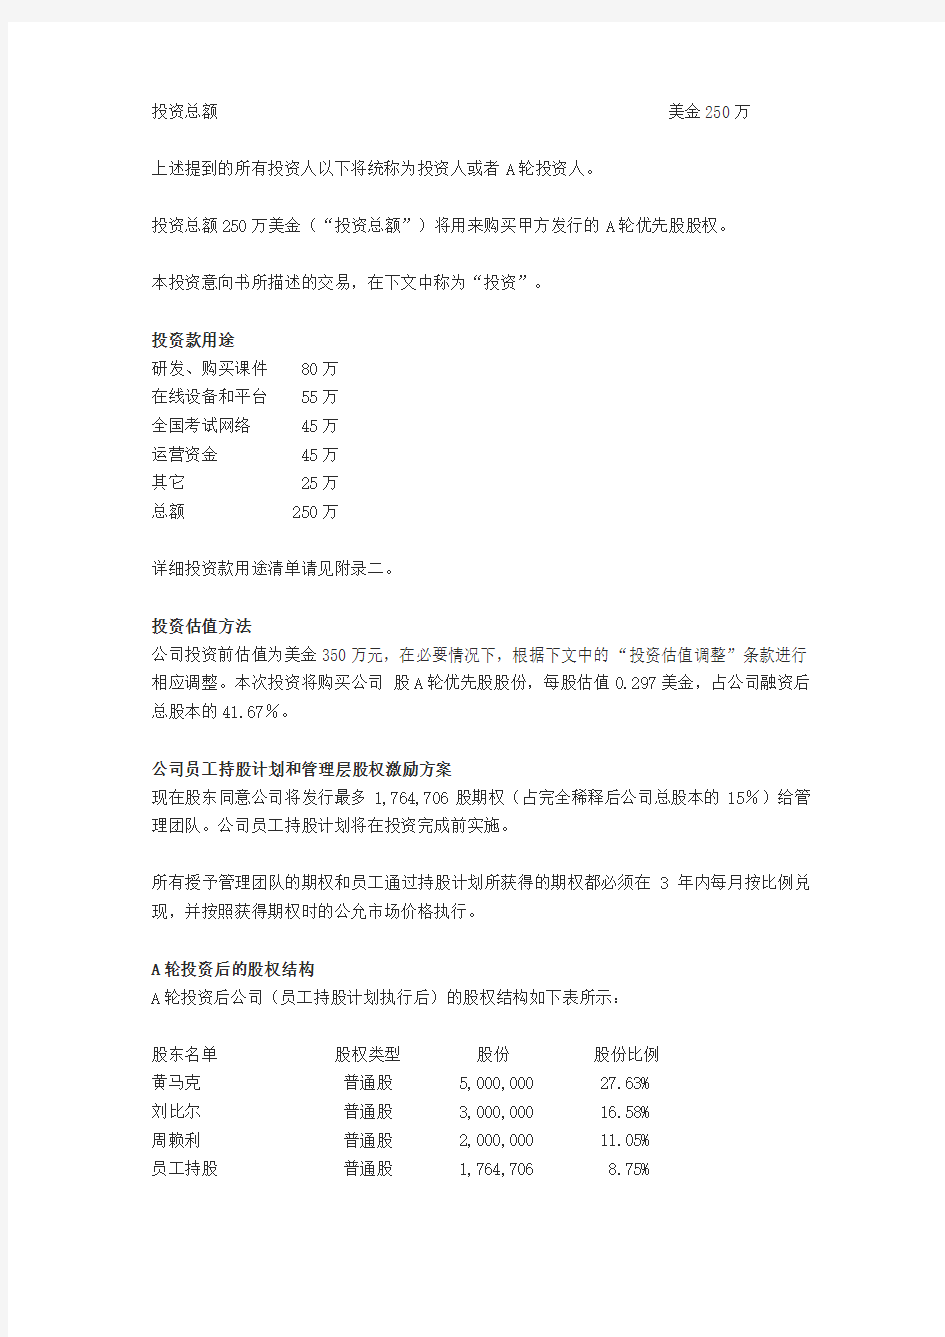 Investment Termsheet(查立)